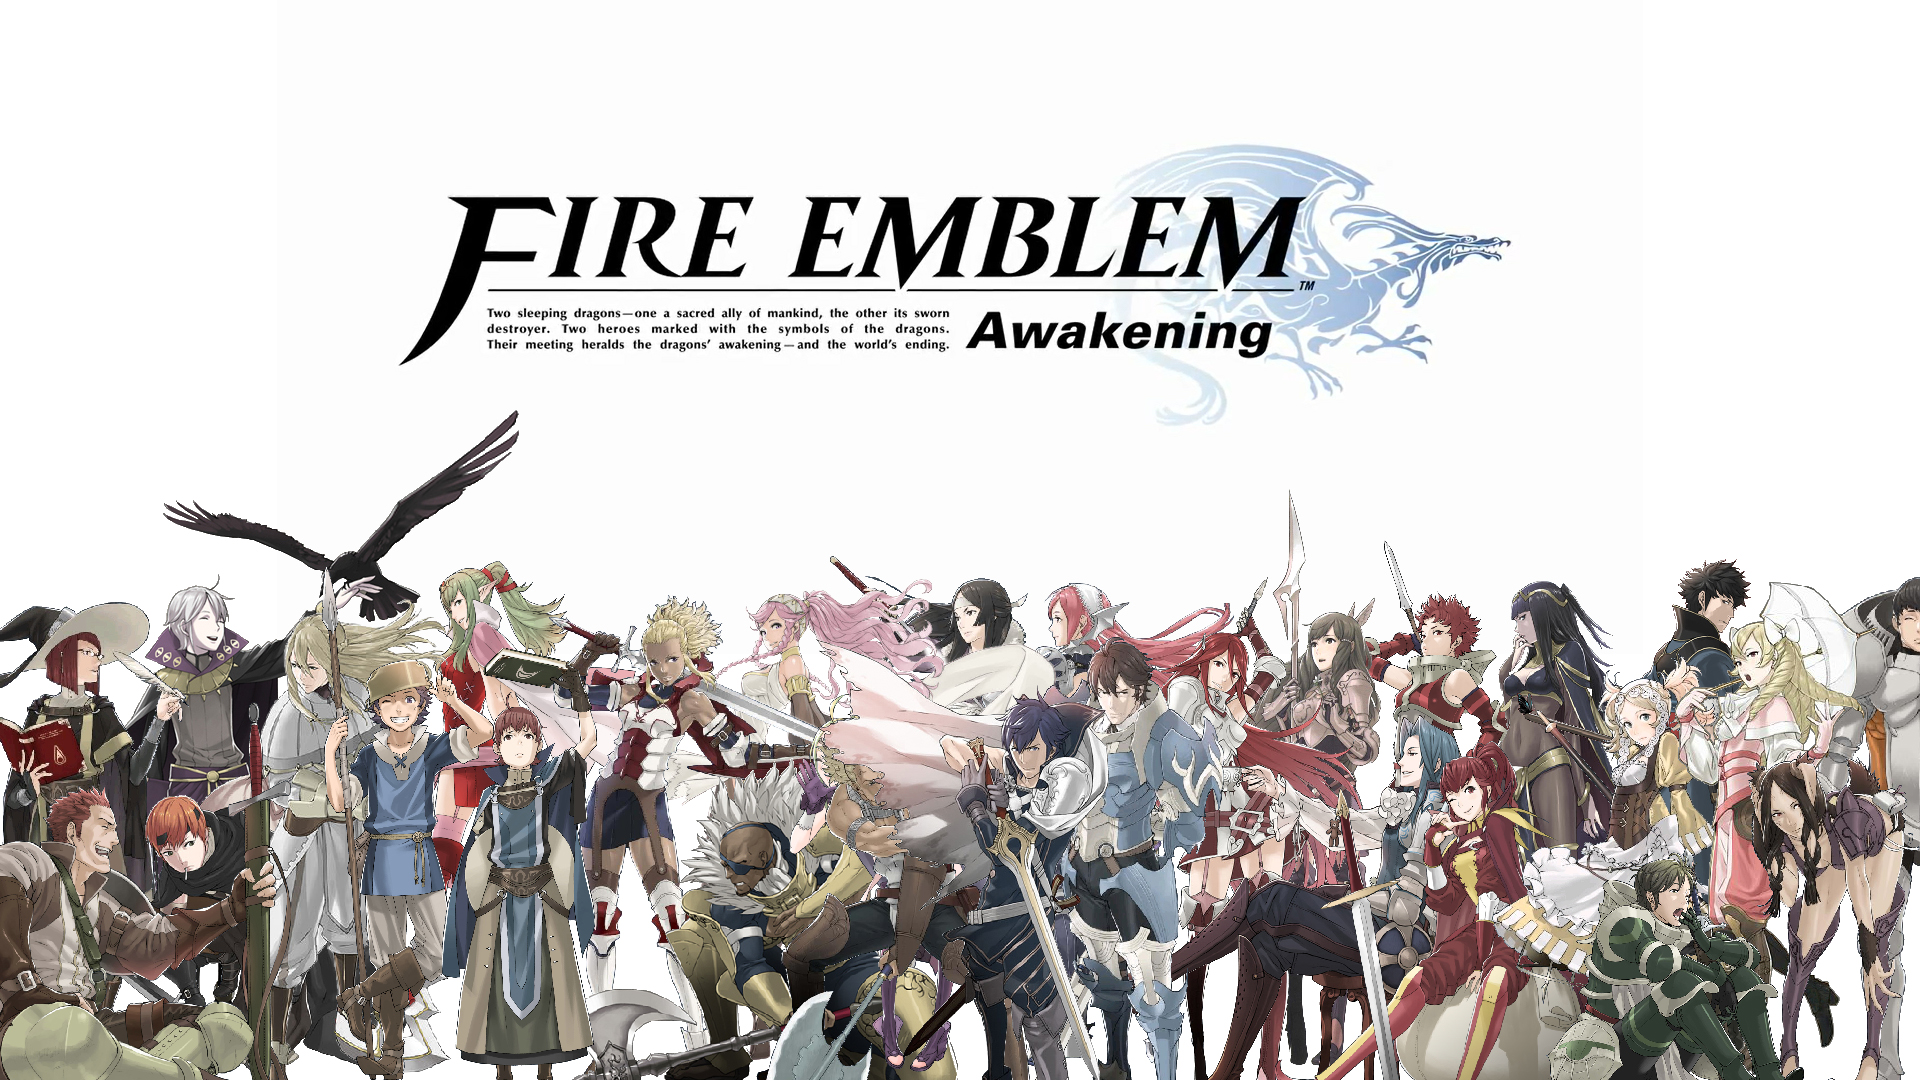 fire emblem awakening wallpaper,rebellion,poster,illustration,event,fictional character